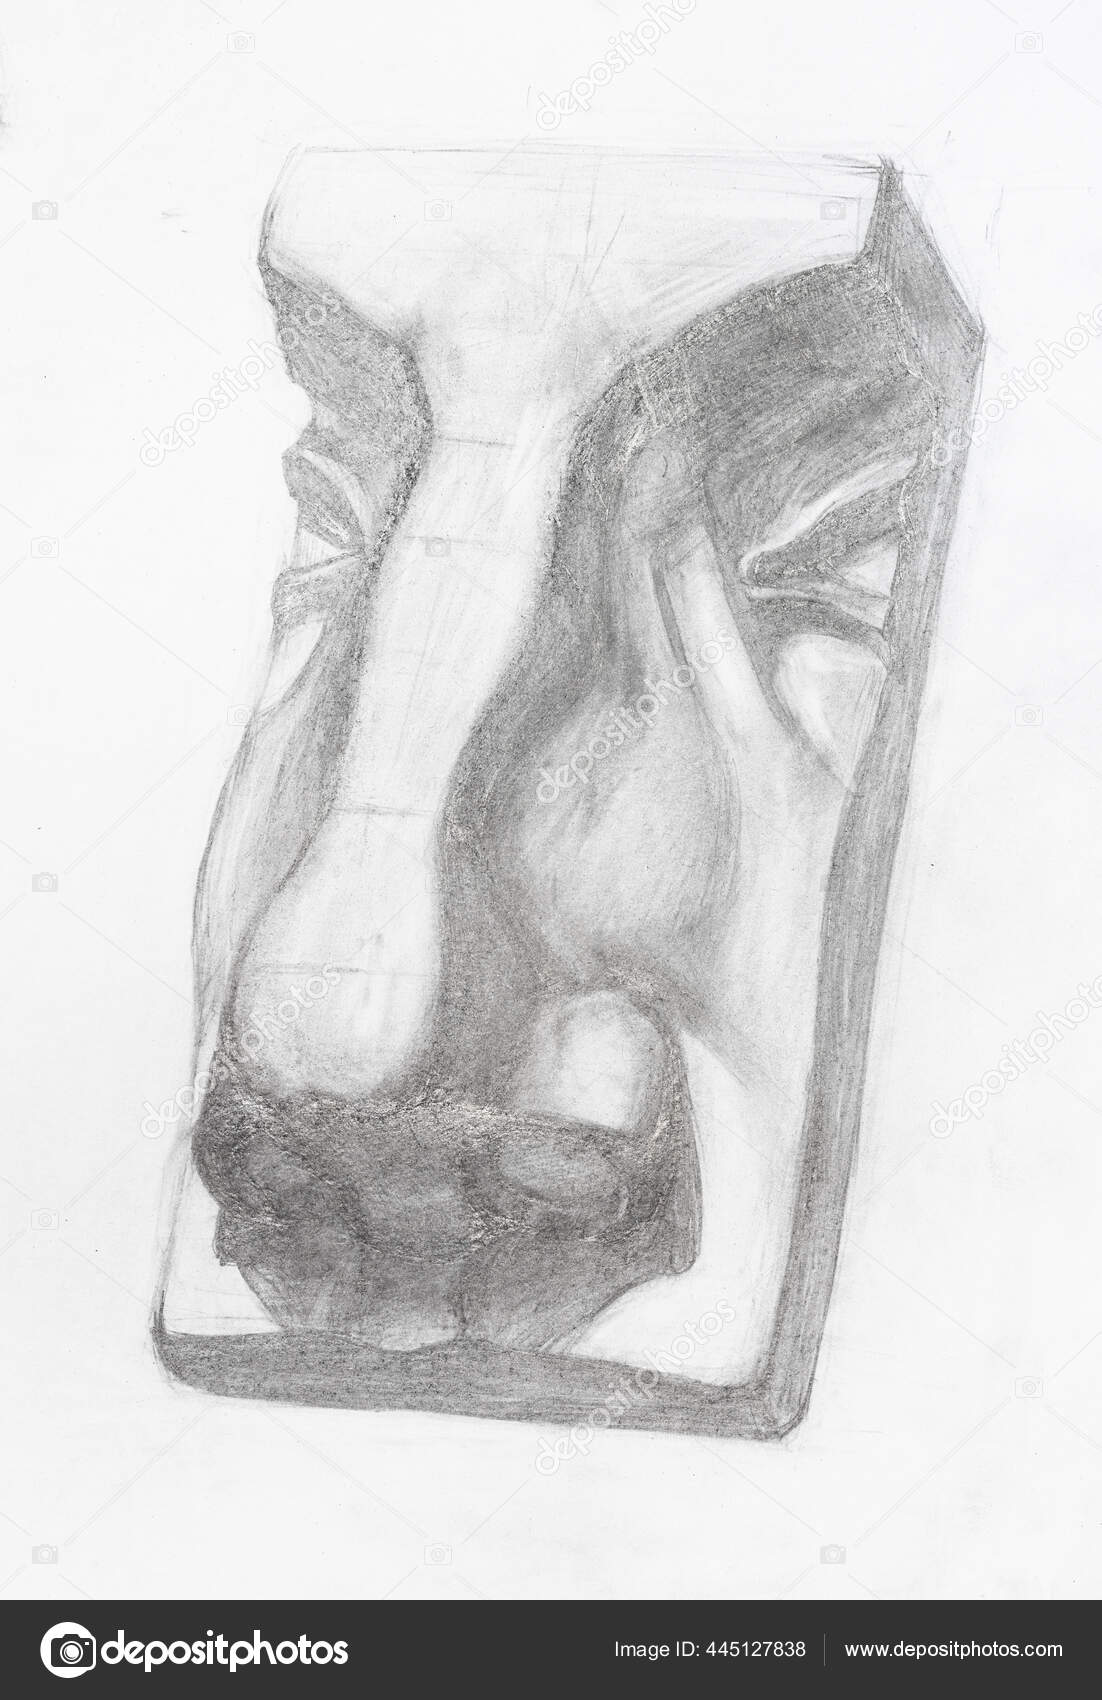 Nose stock image. Image of sketch, pencil, draw, black - 10760611